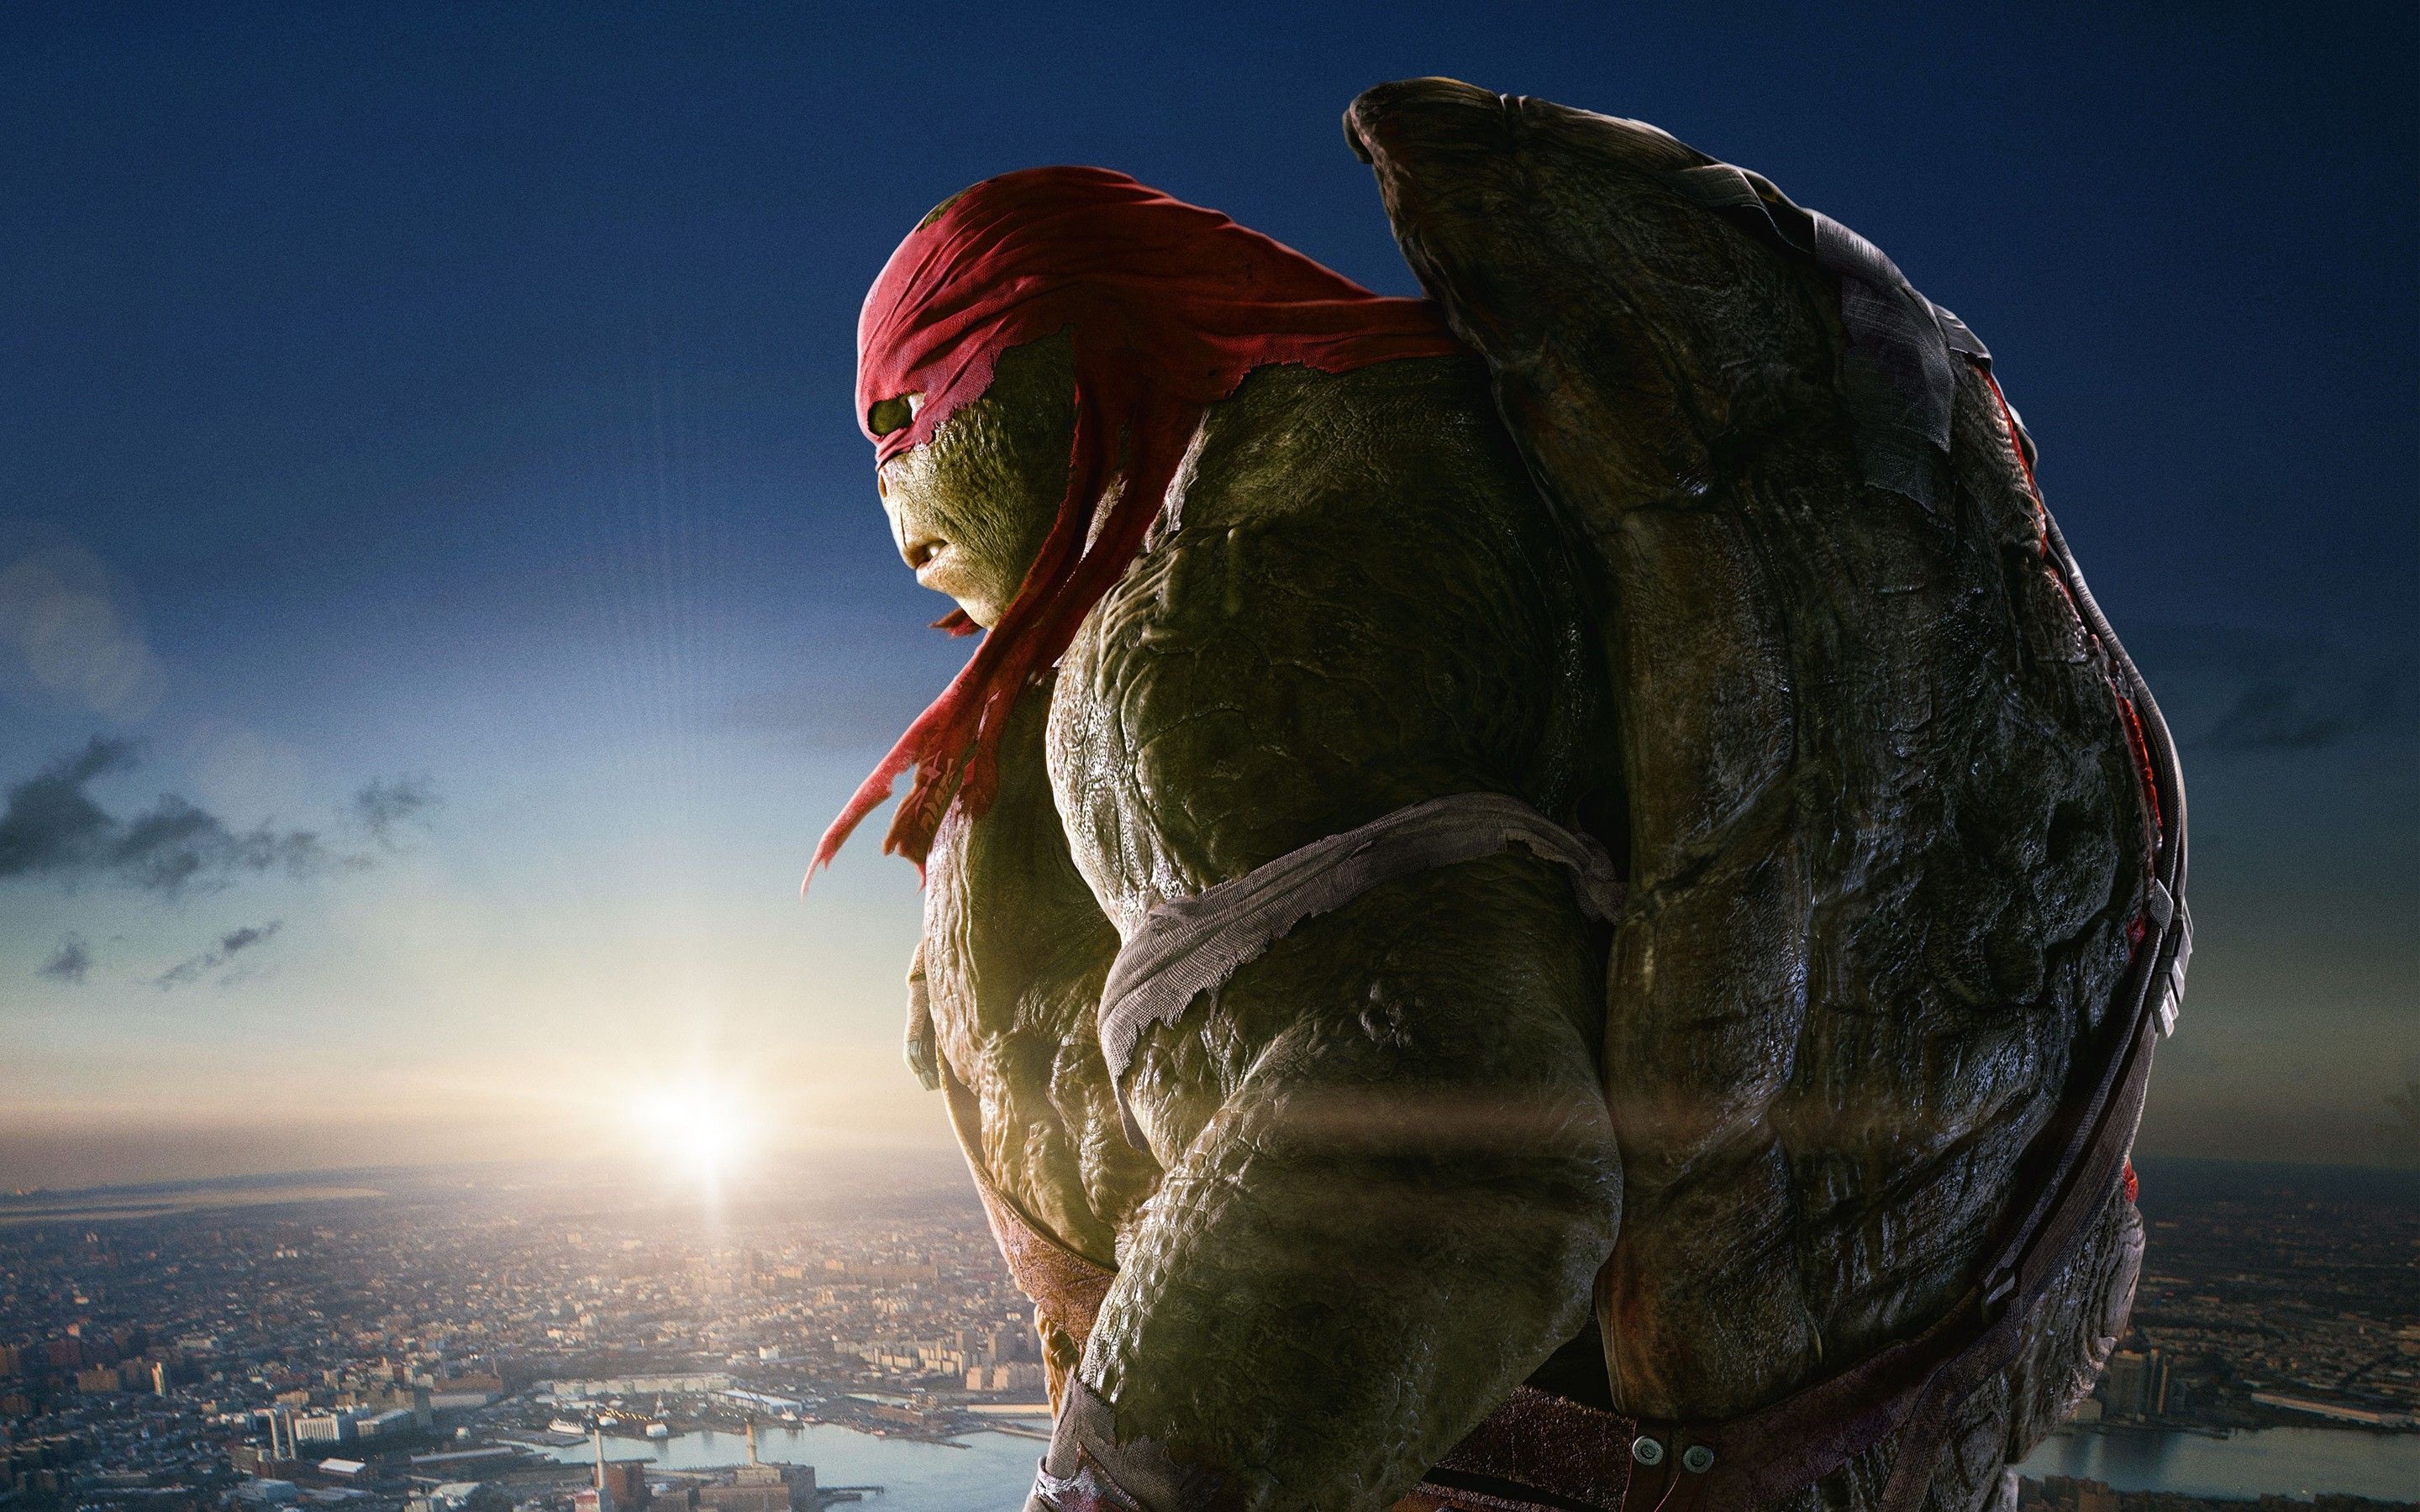 Raphael In Teenage Mutant Ninja Turtles, HD Movies, 4k Wallpaper, Image, Background, Photo and Picture